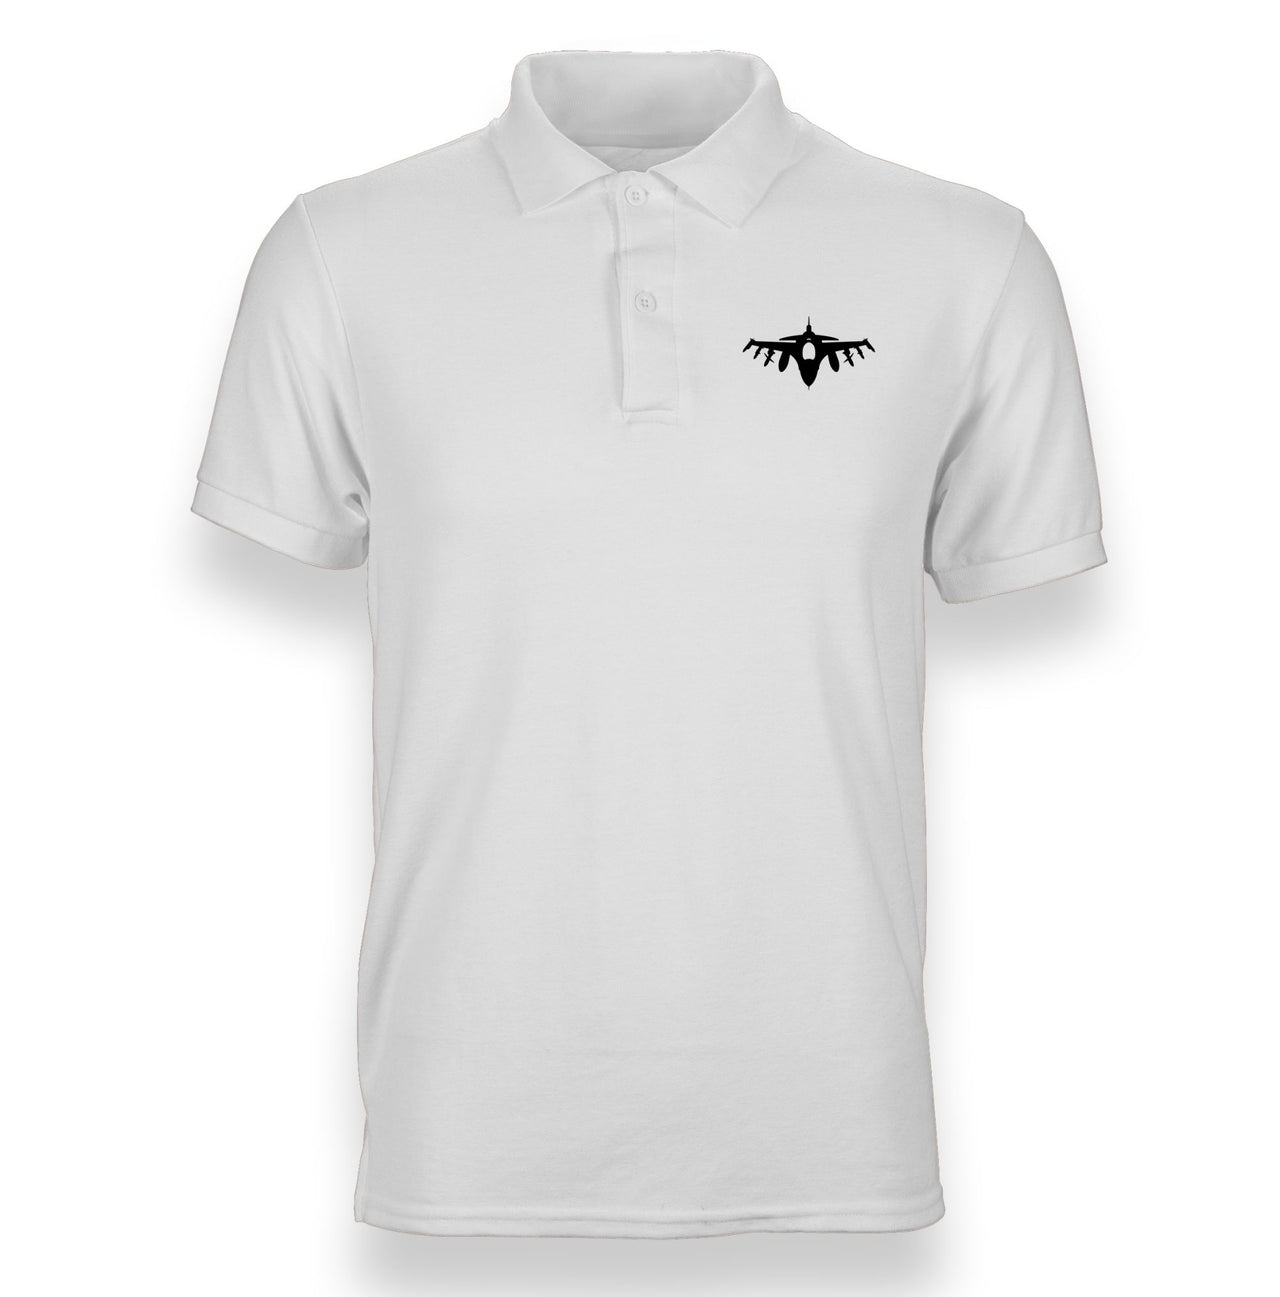 Fighting Falcon F16 Silhouette Designed "WOMEN" Polo T-Shirts